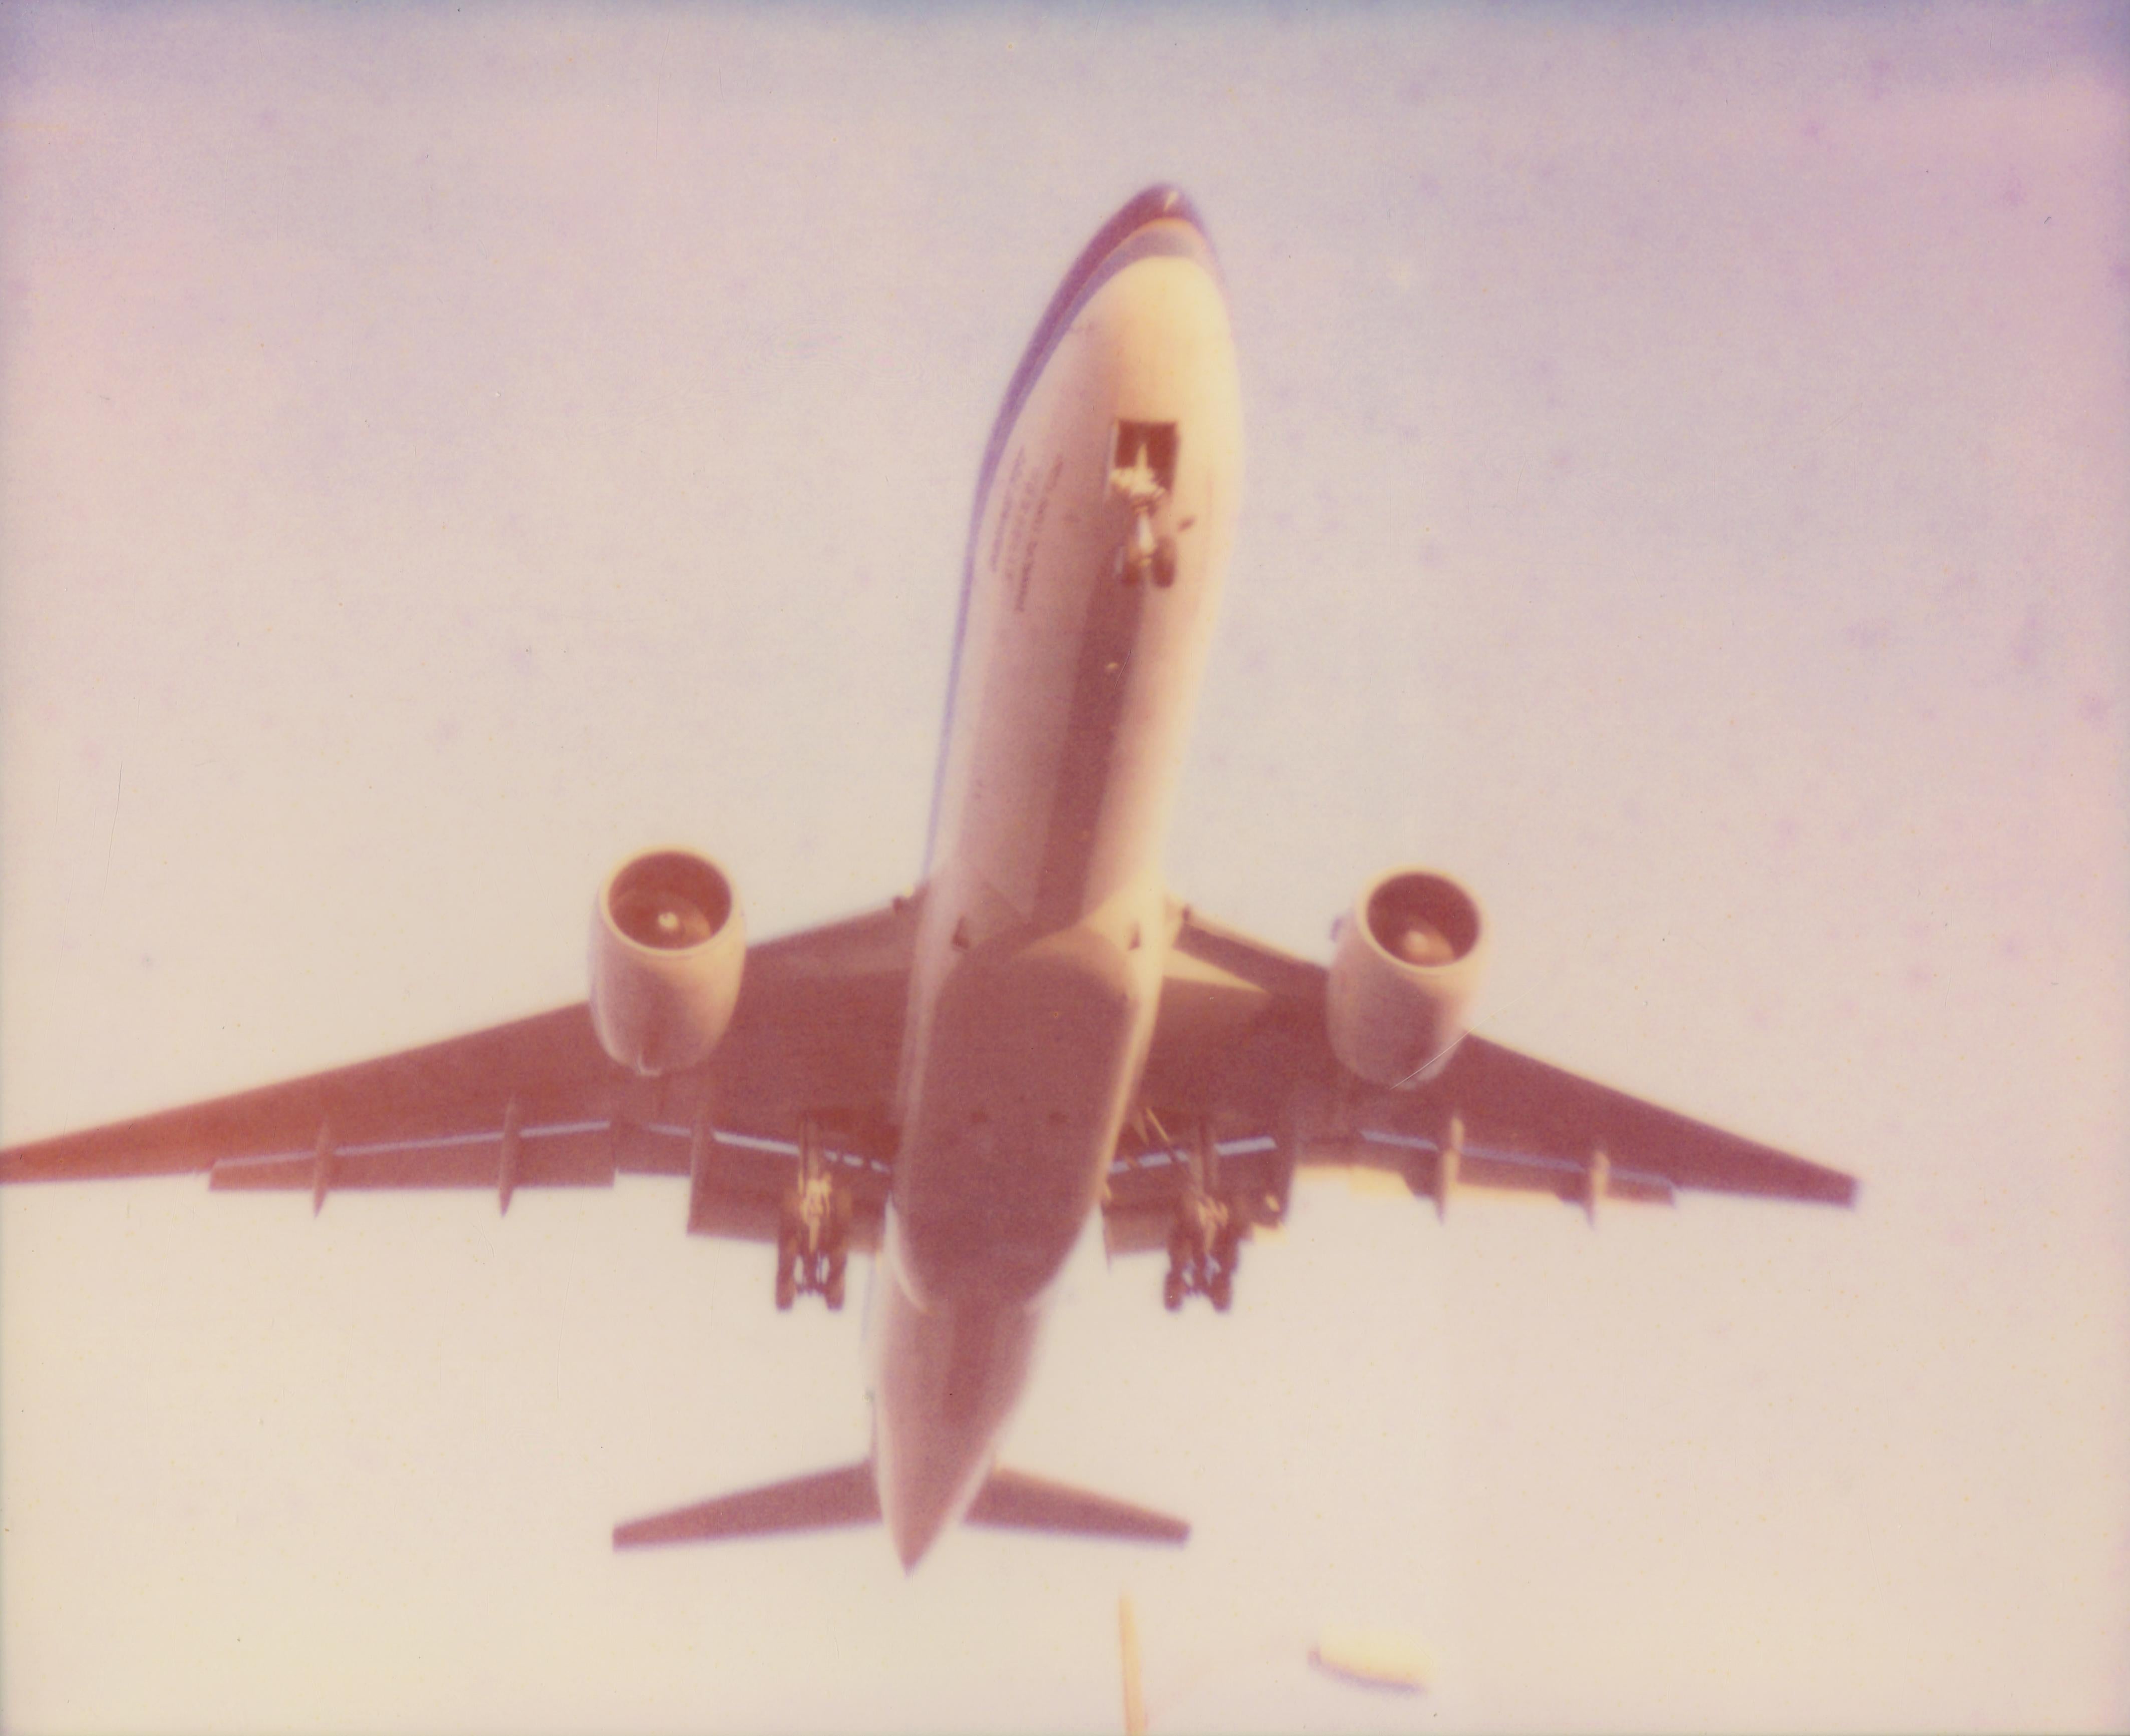 Stefanie Schneider Landscape Photograph - Plane leaving (Stranger than Paradise)